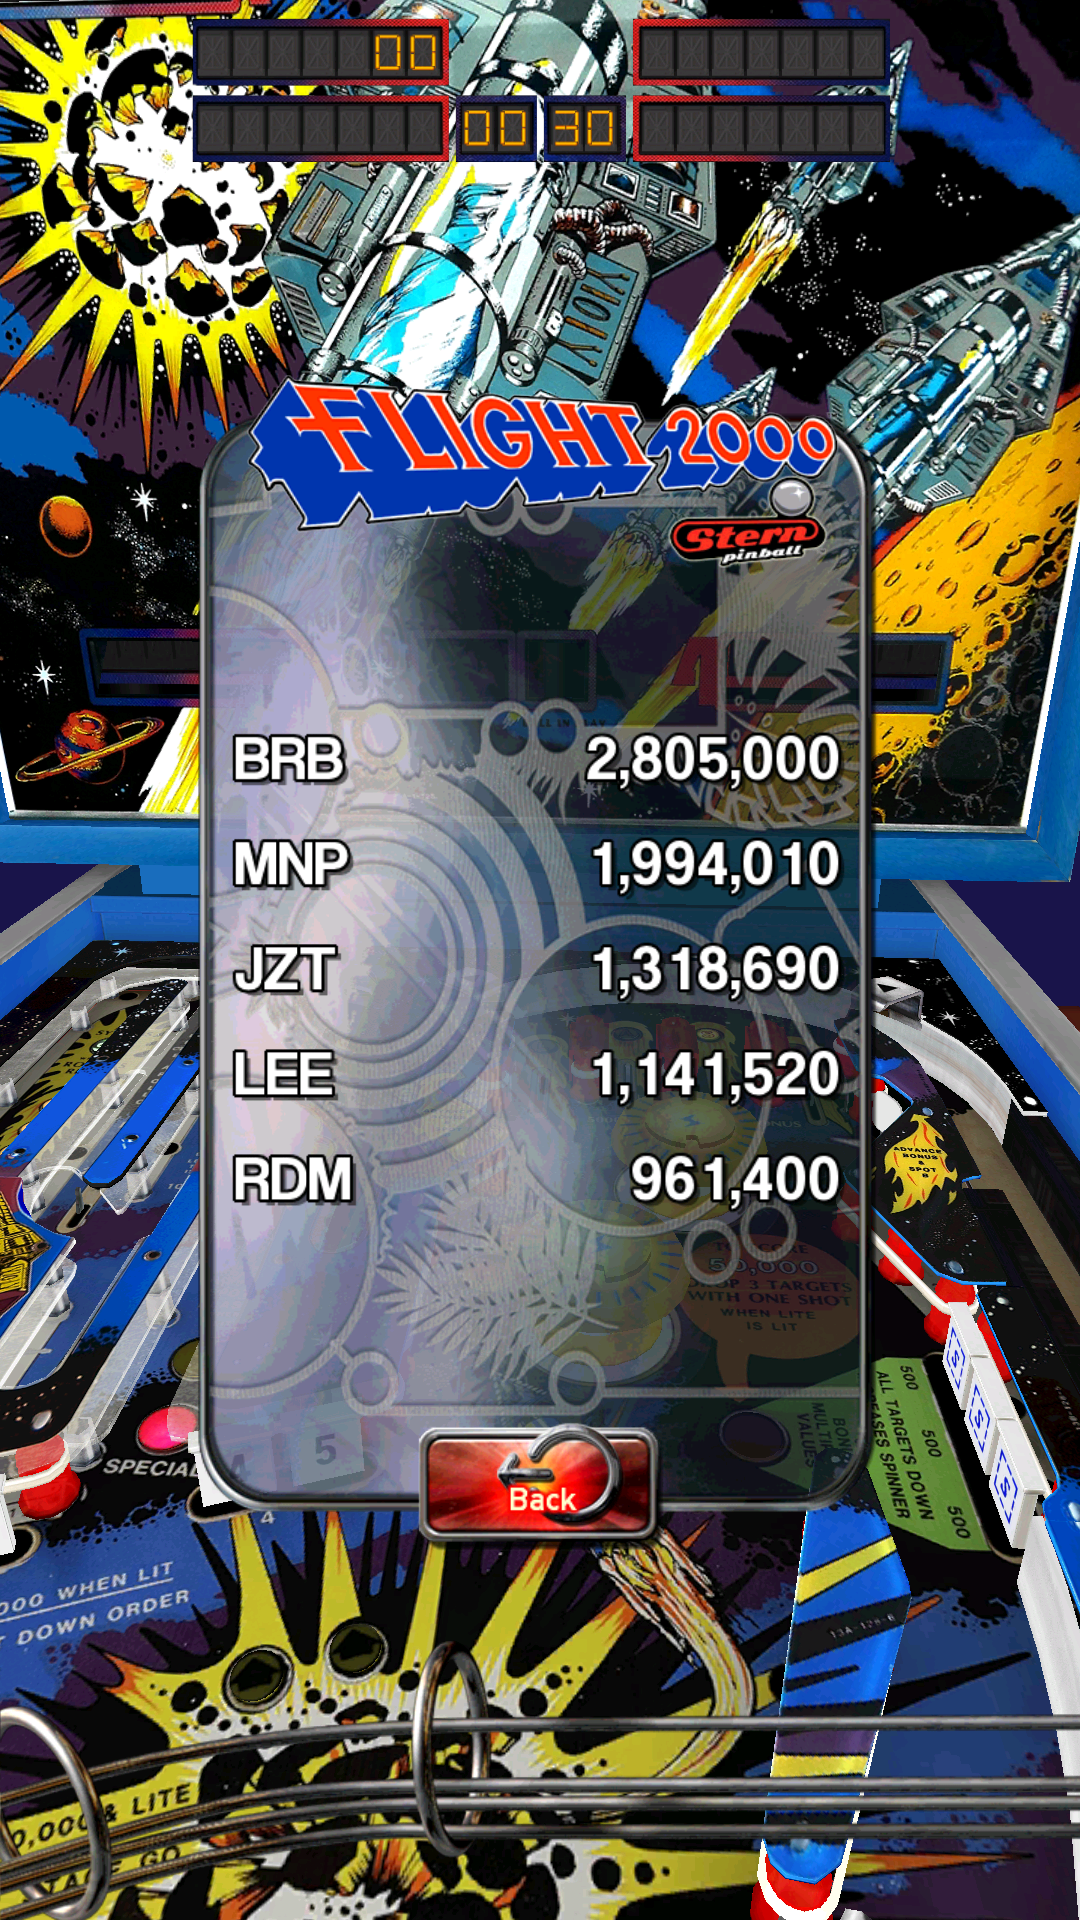 LeeJ07: Pinball Arcade: Flight 2000 (Android) 1,141,520 points on 2015-06-29 11:43:36